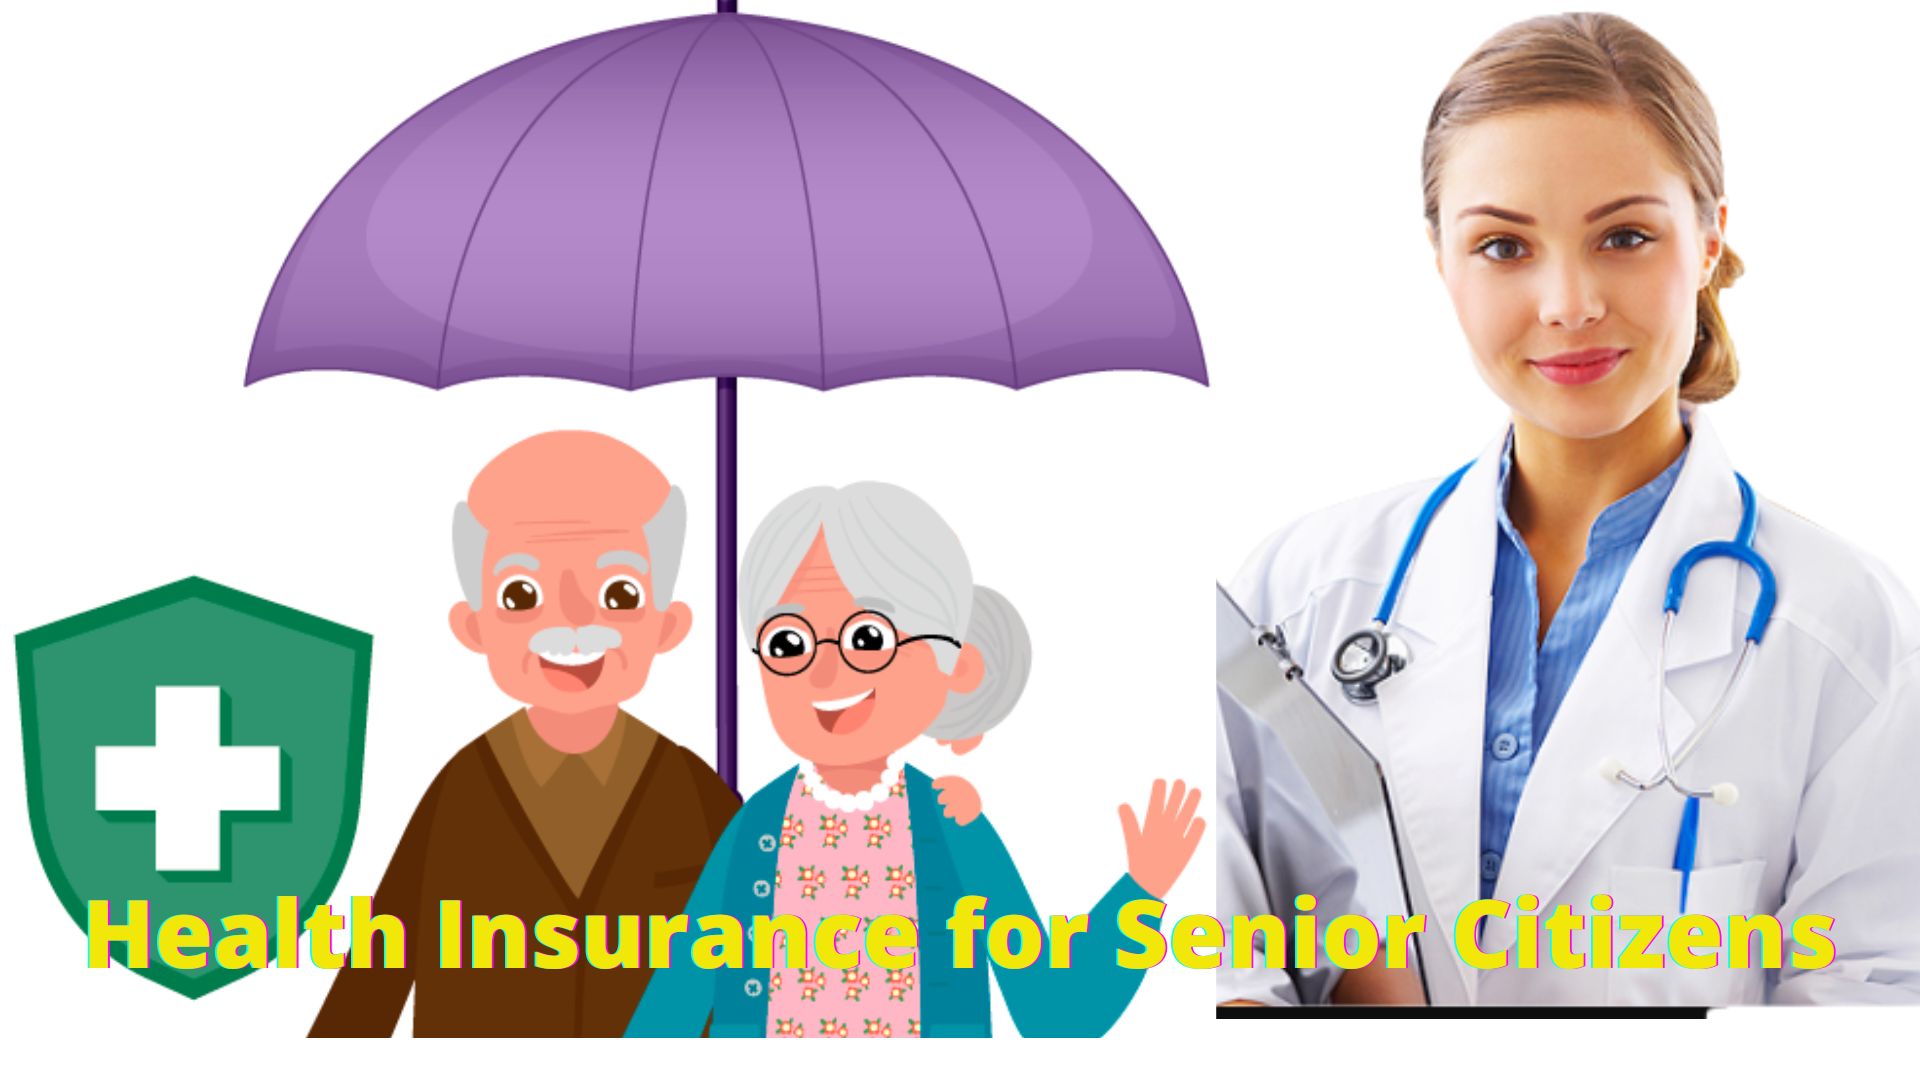 What is Senior Citizen Health Insurance?